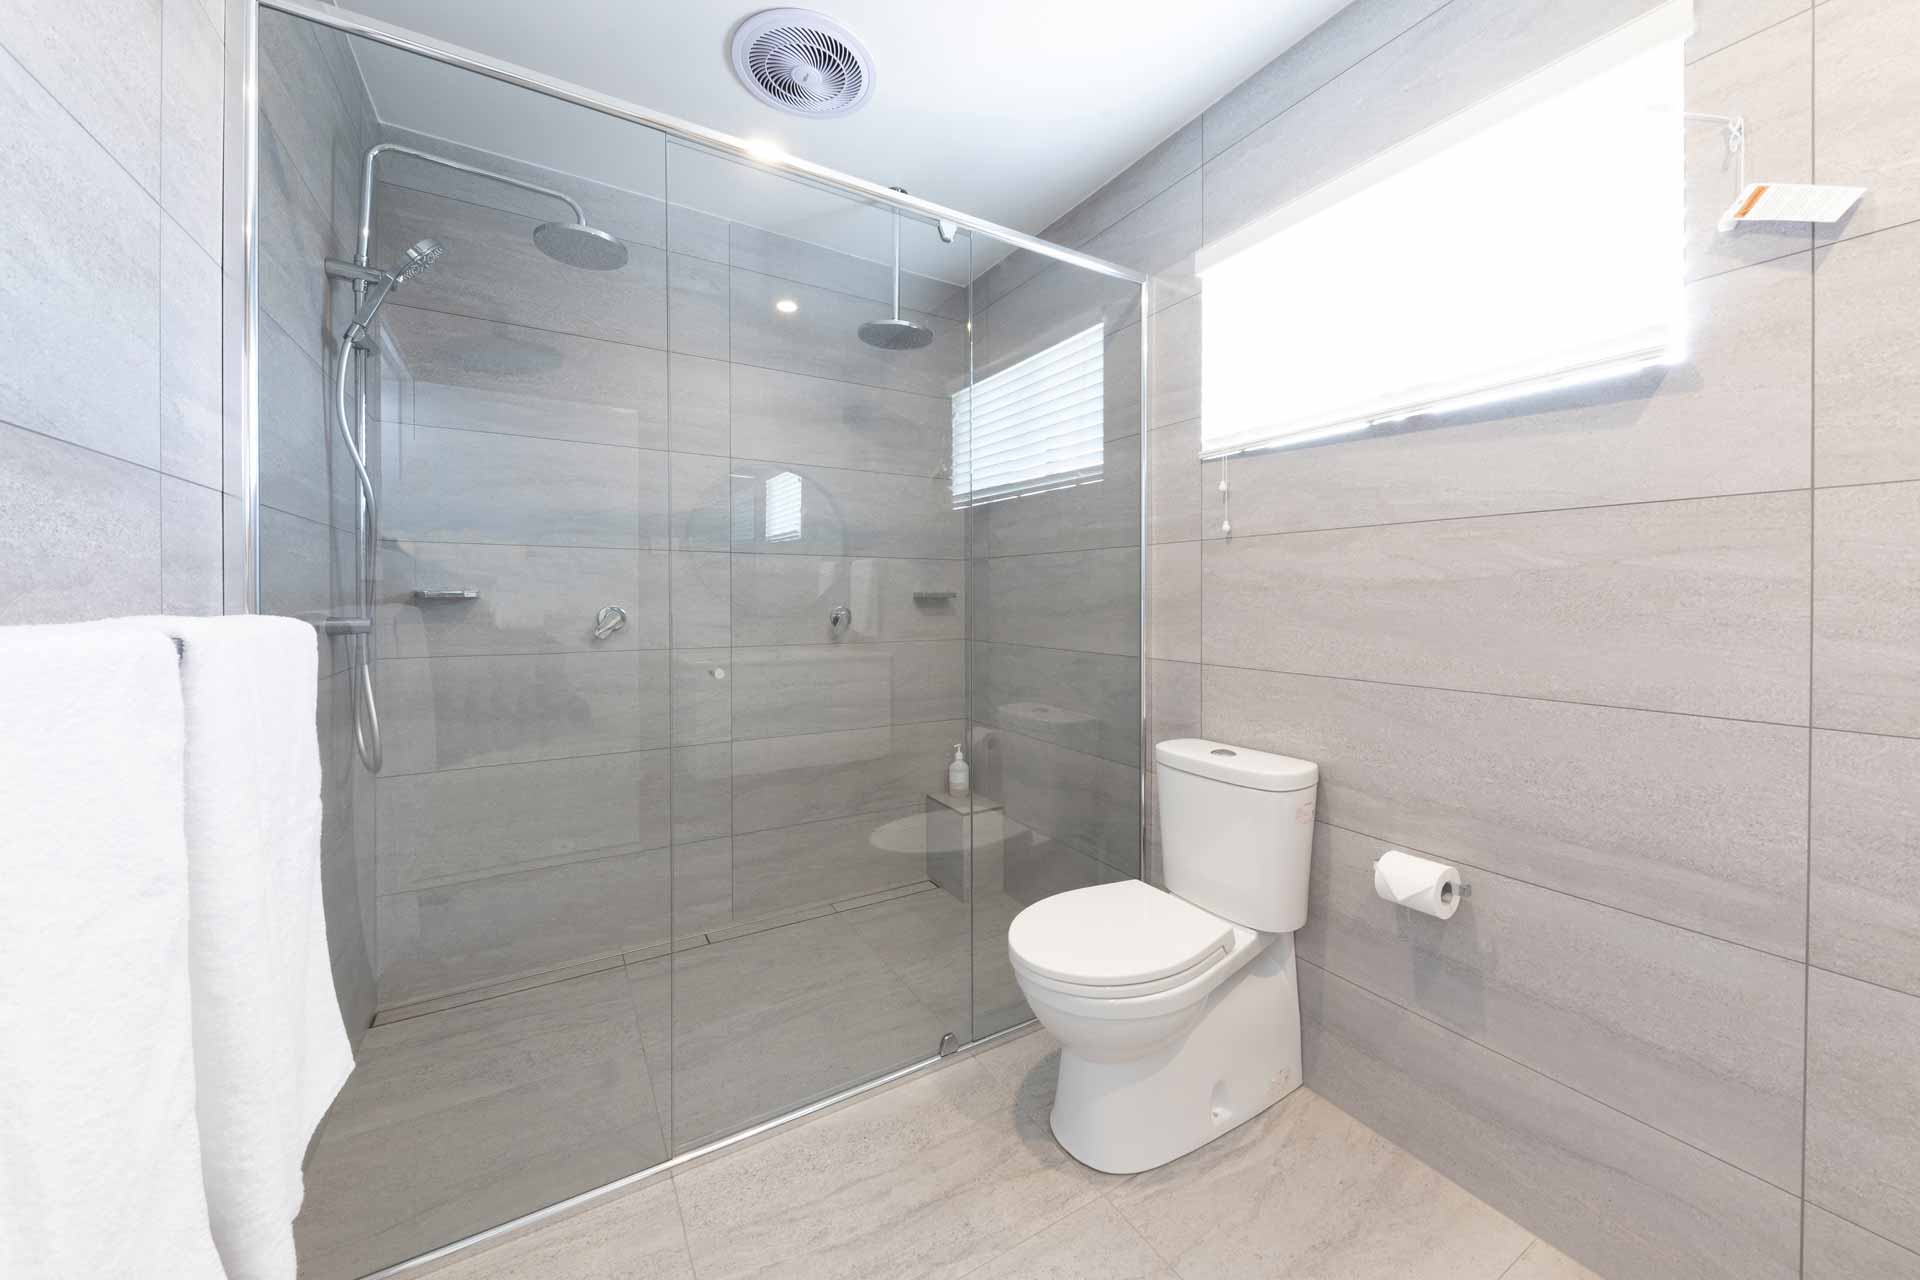 37. 2 Bedroom Apartment Bathroom Double Shower